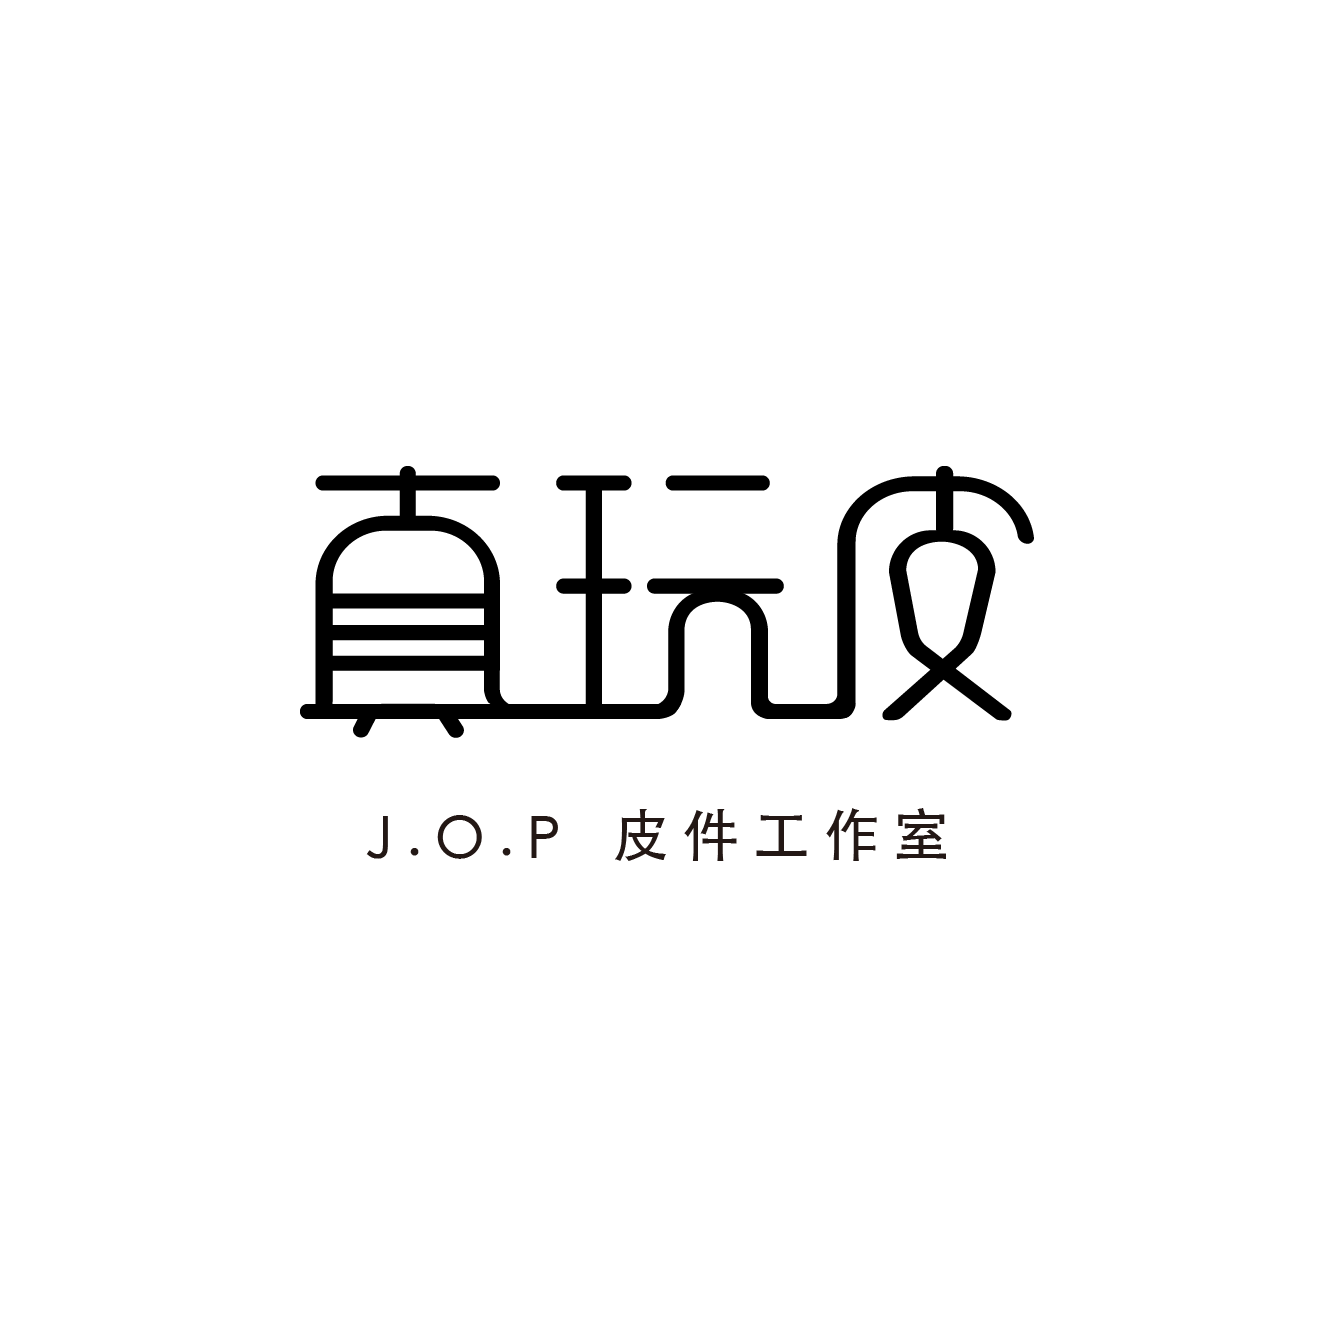 J.O.P 皮件工作室